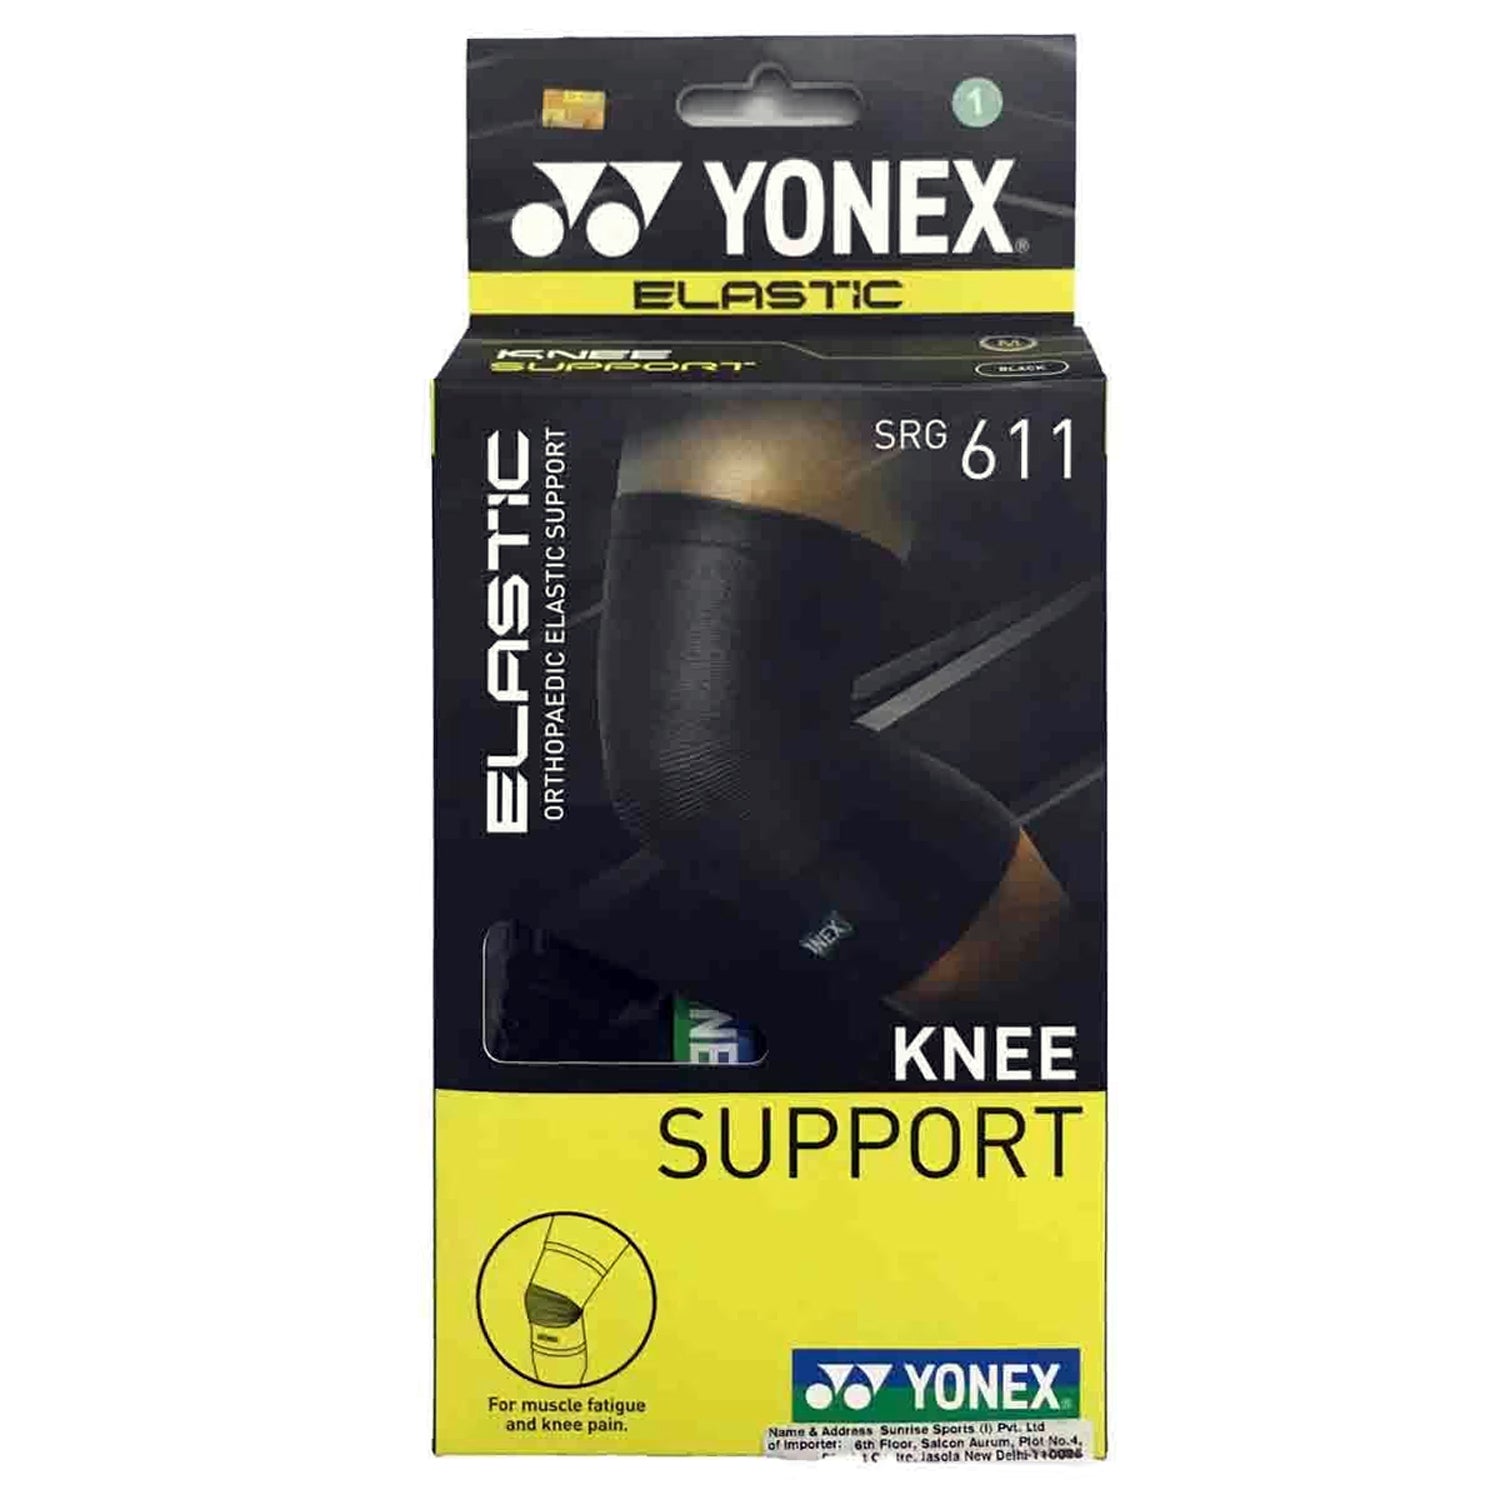 Yonex SRG 611 Knee Support, Black - Best Price online Prokicksports.com